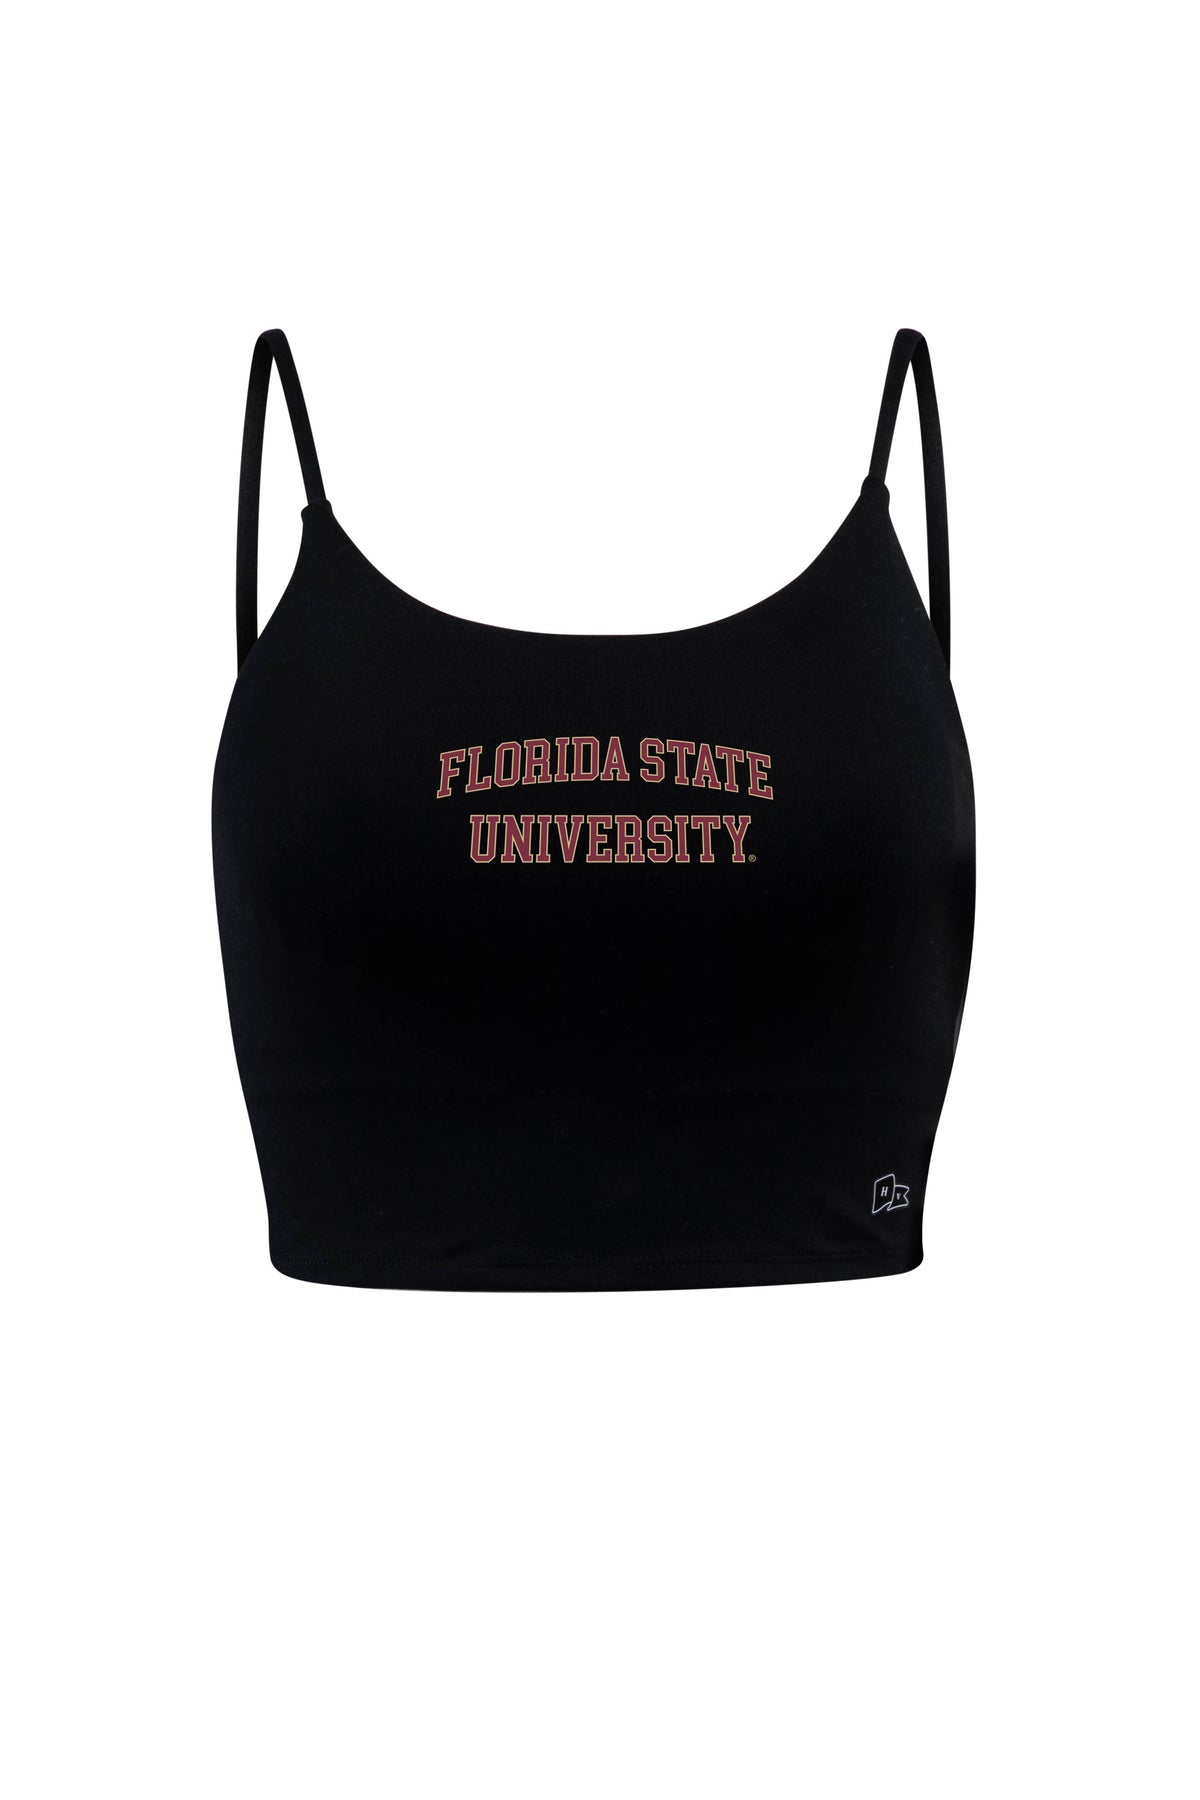 Florida State University Bra Tank Top